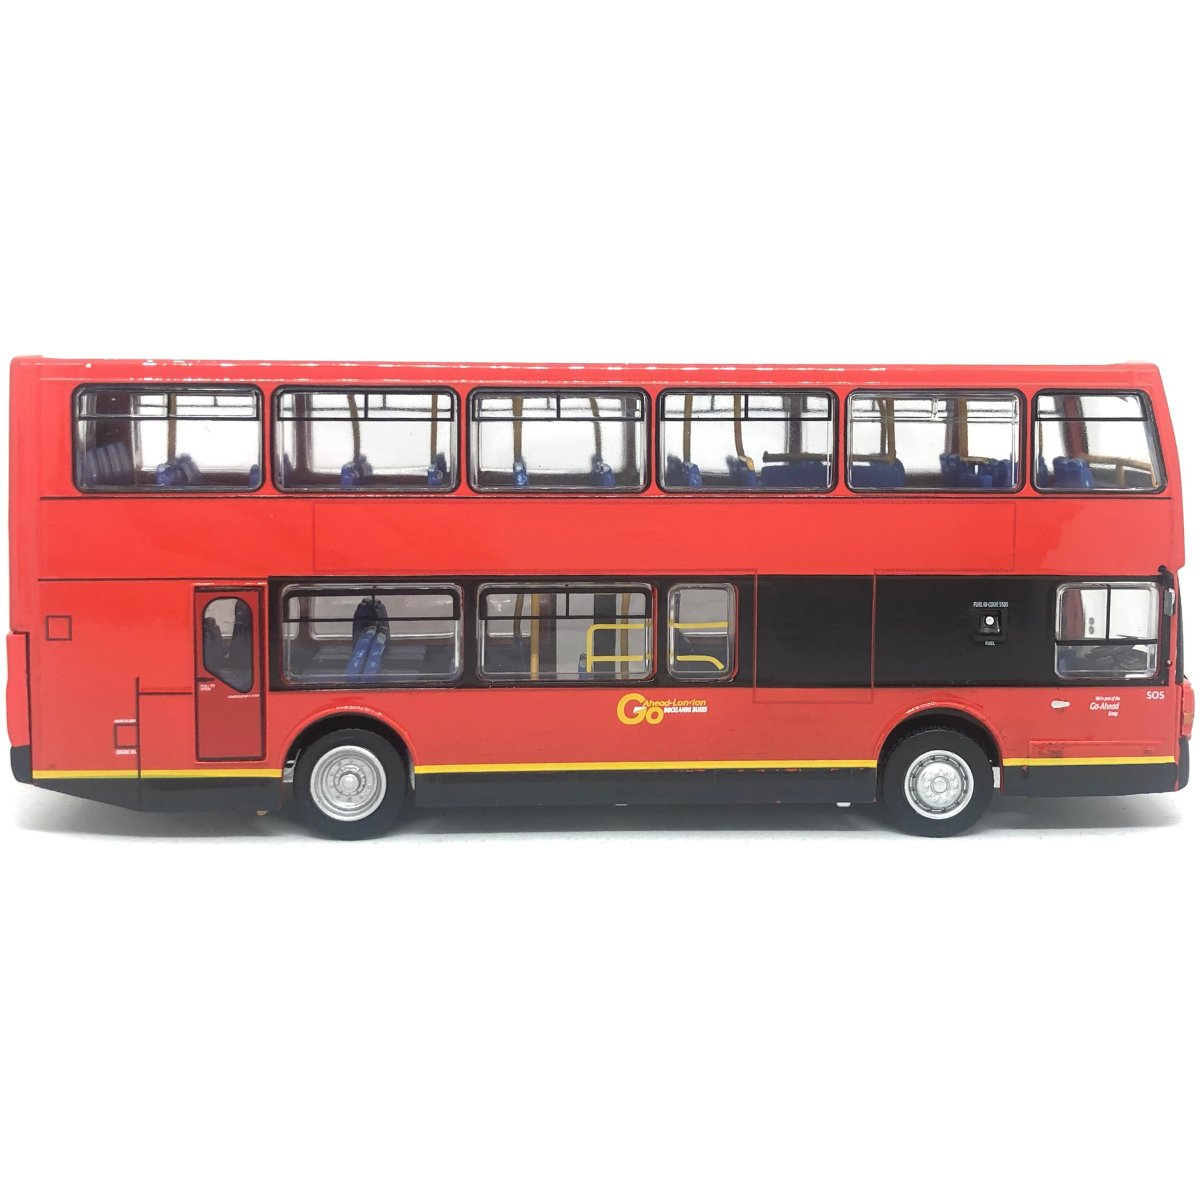 Britbus ES2-04A Scania Elc Omnidekka Go Ahead London (Clapton) - Phillips Hobbies